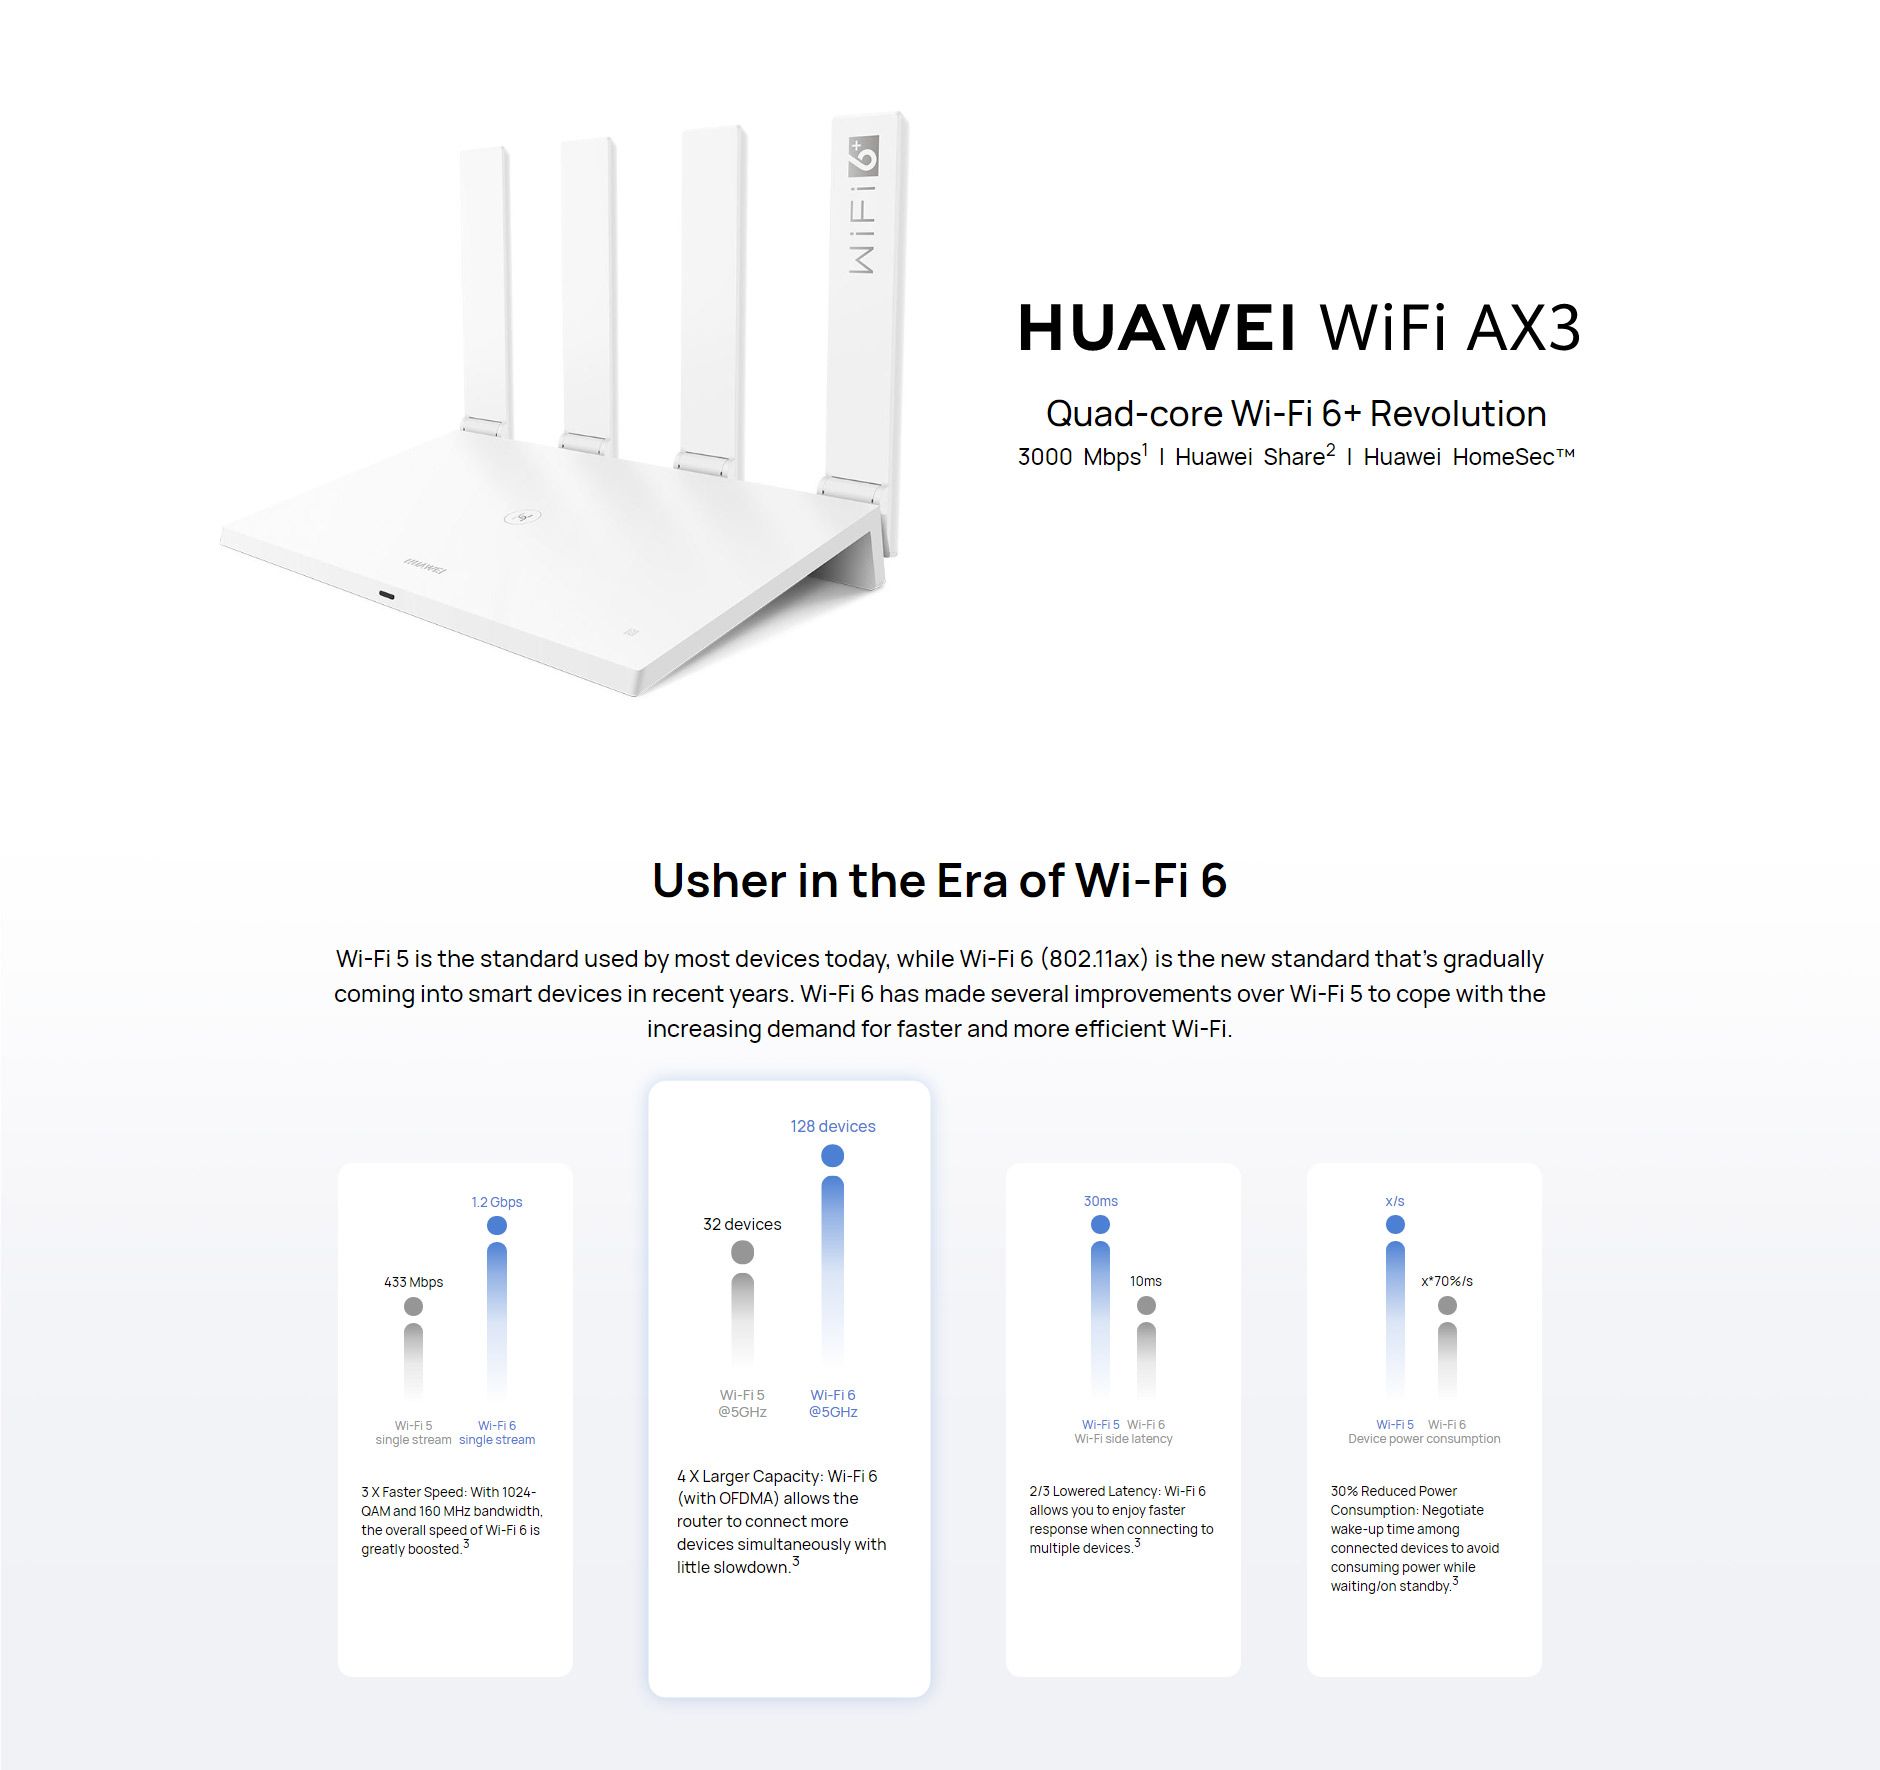 HUAWEI-WiFi-AX3-AX3-Pro-Wi-Fi-6-WiFi-Router-Mesh-3000Mbps-Huawei-Share-HarmonyOS-Wireless-Router-Mes-1652302